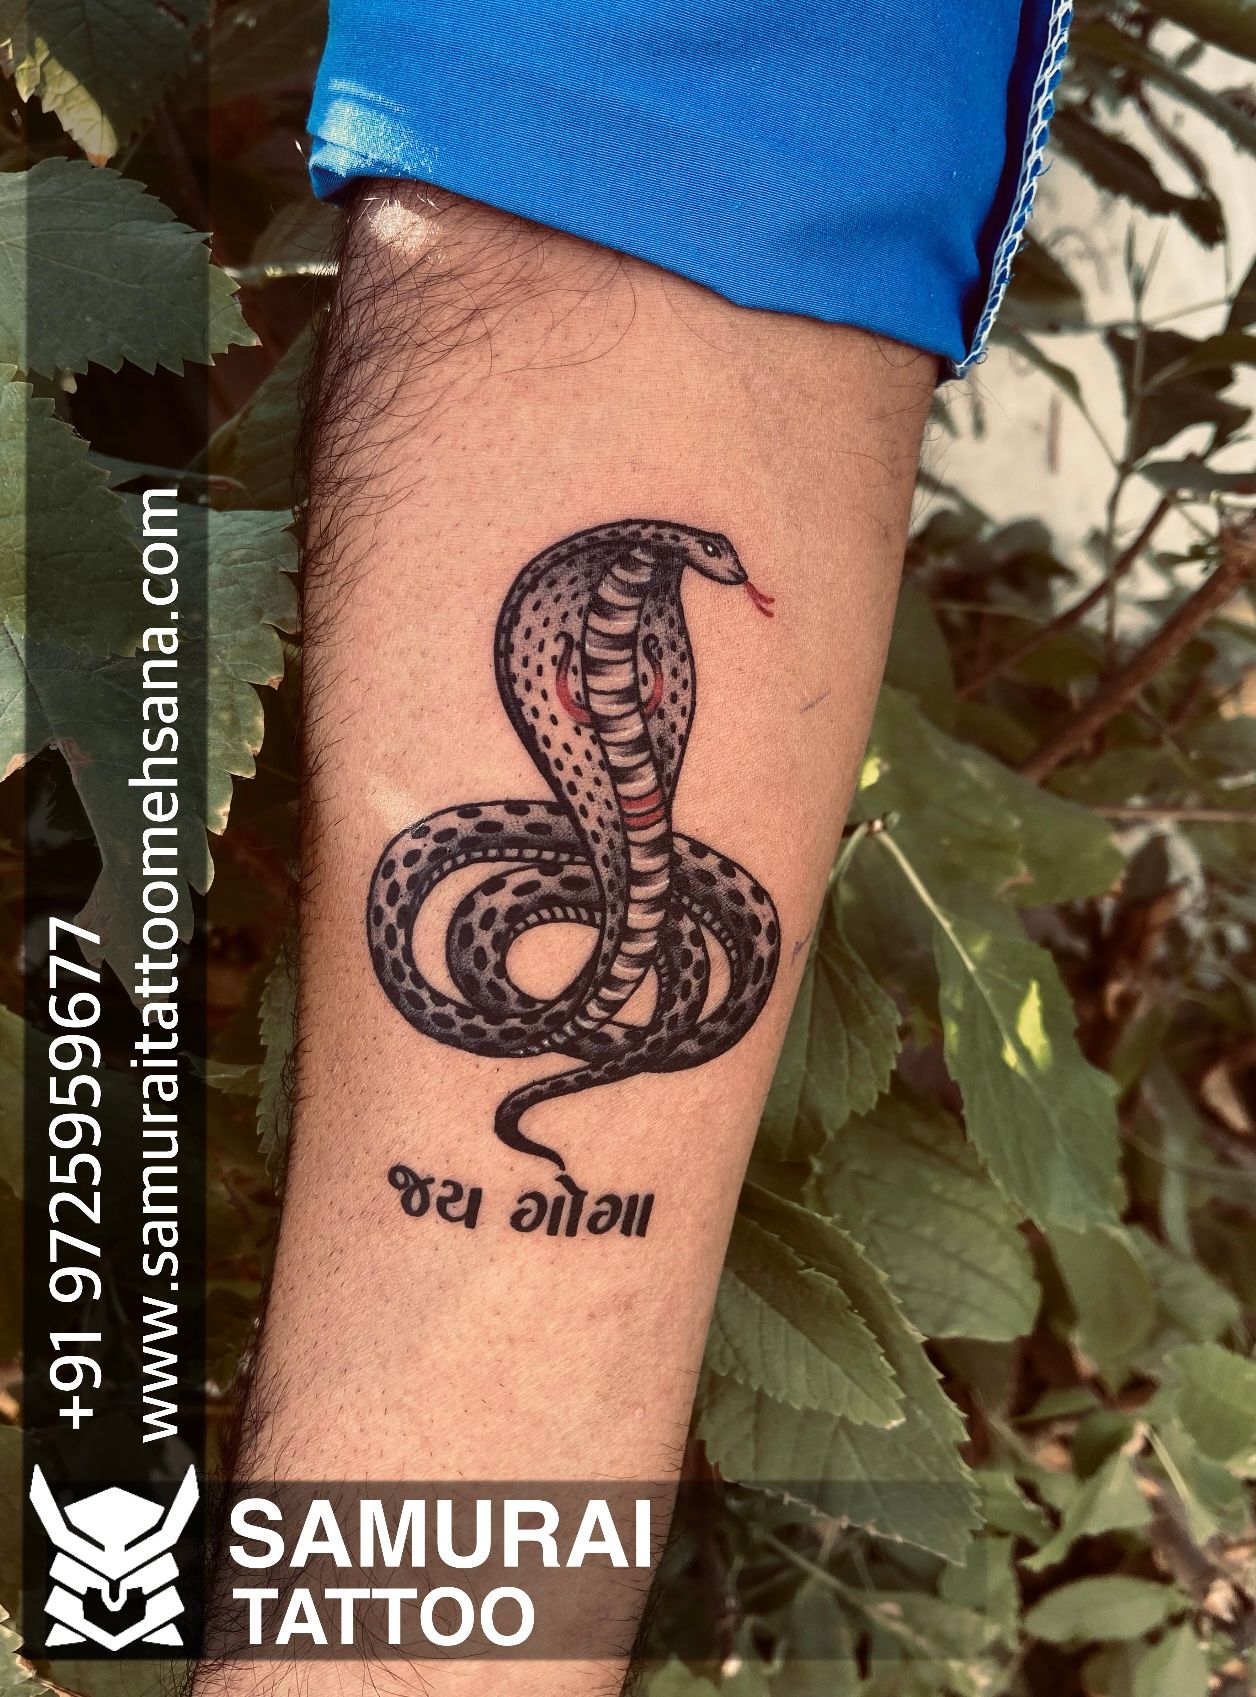 Tattoo uploaded by Vipul Chaudhary • Chamund maa tattoo |Chamunda tattoo  |Maa chamunda tattoo |Chamunda mataji nu tattoo • Tattoodo